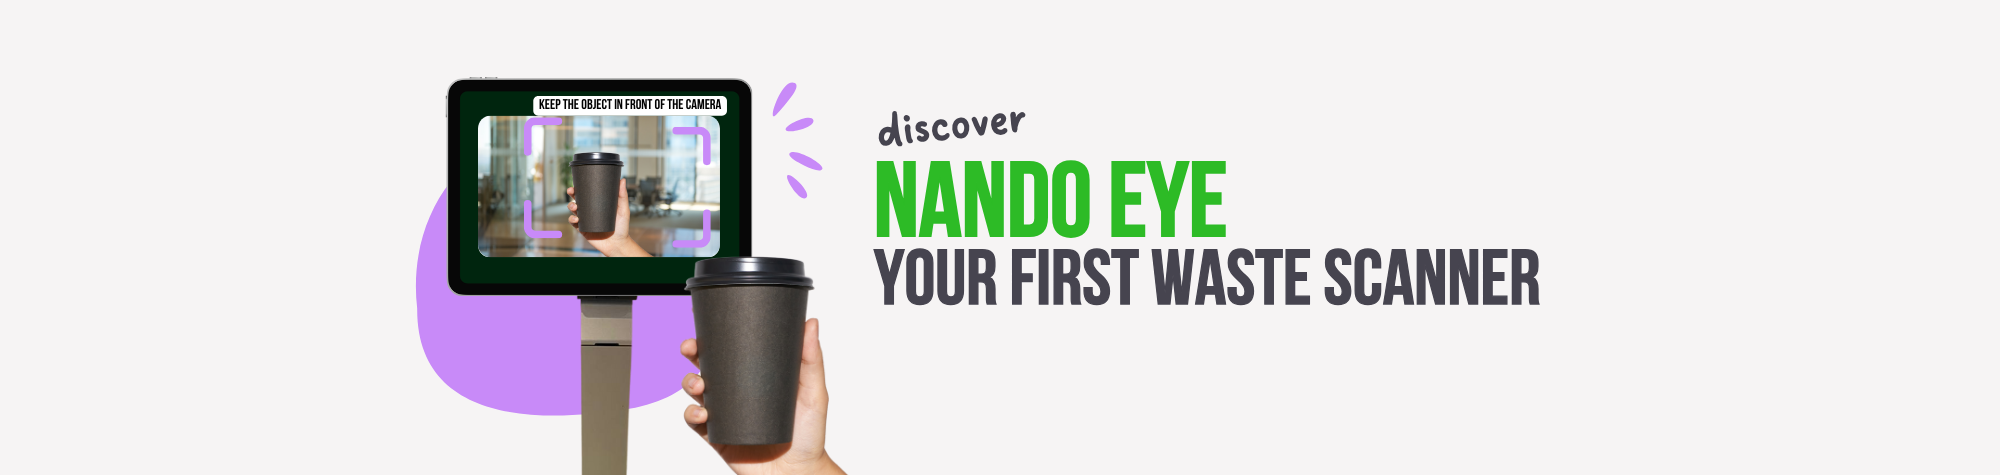 NANDO Eye: Your First Waste Scanner!